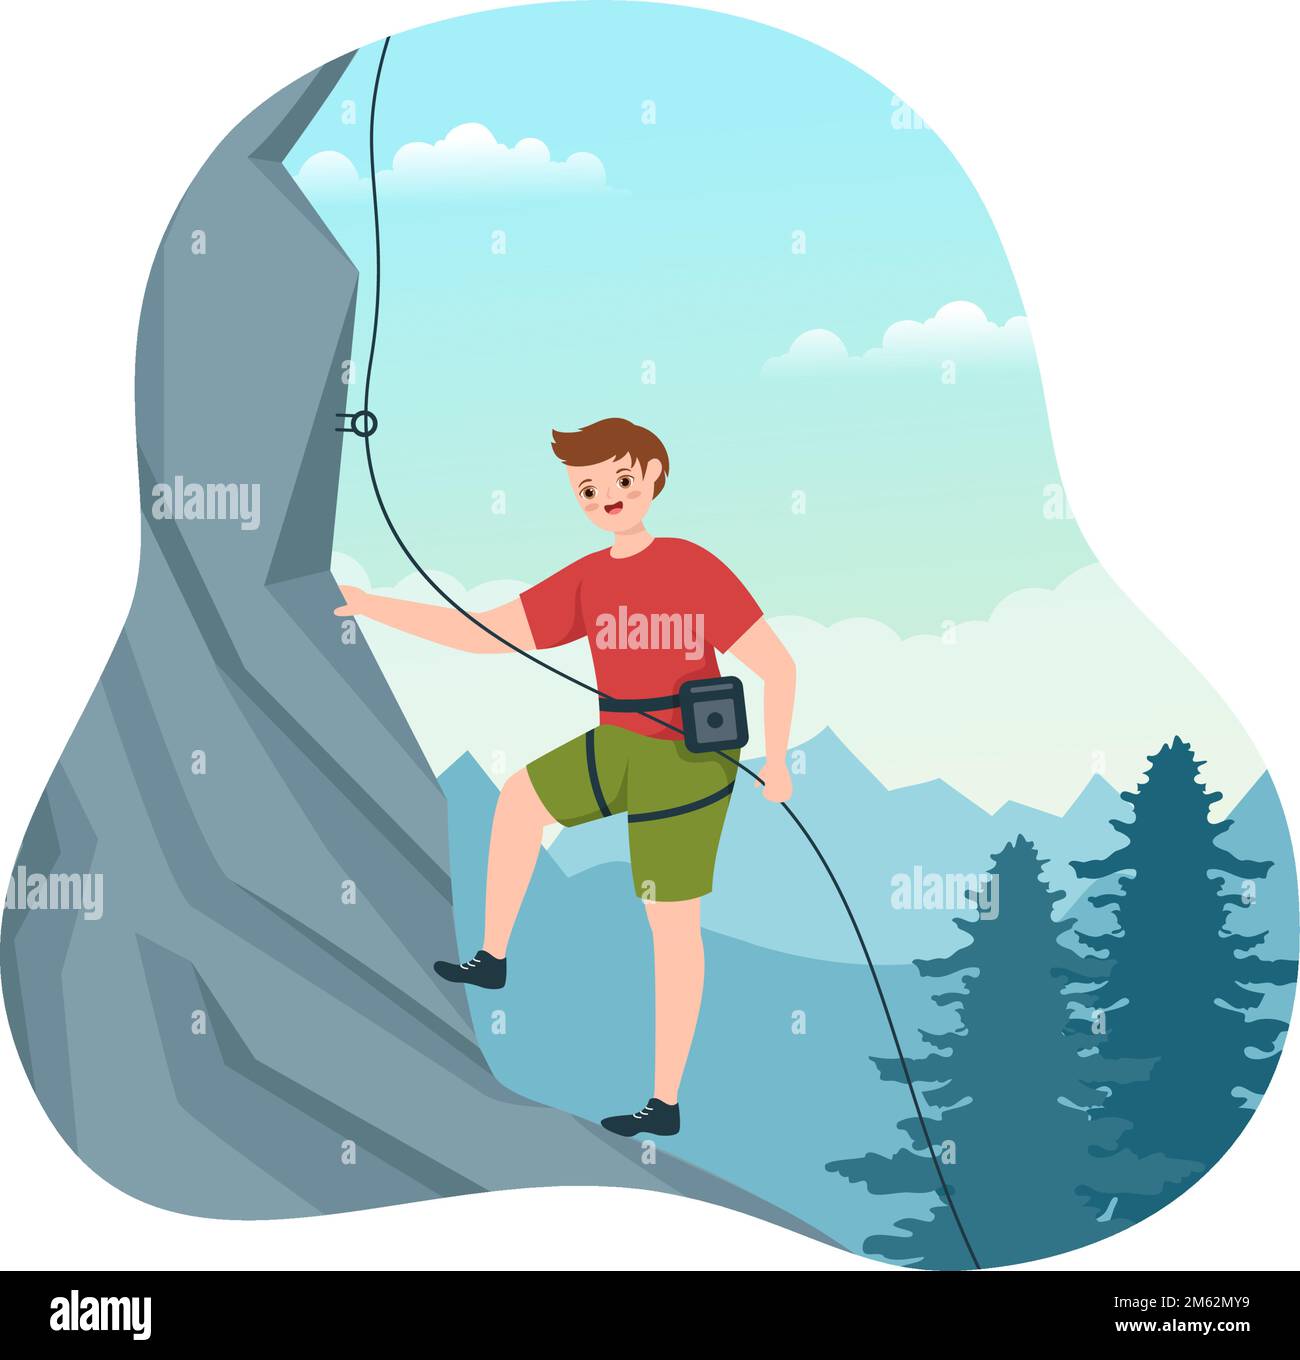 Cliff Climbing Illustration mit Kletterer Climbing Rock Wall oder Mountain Cliffs und Extreme Activity Sport in Flat Cartoon Hand Drawn Template Stock Vektor